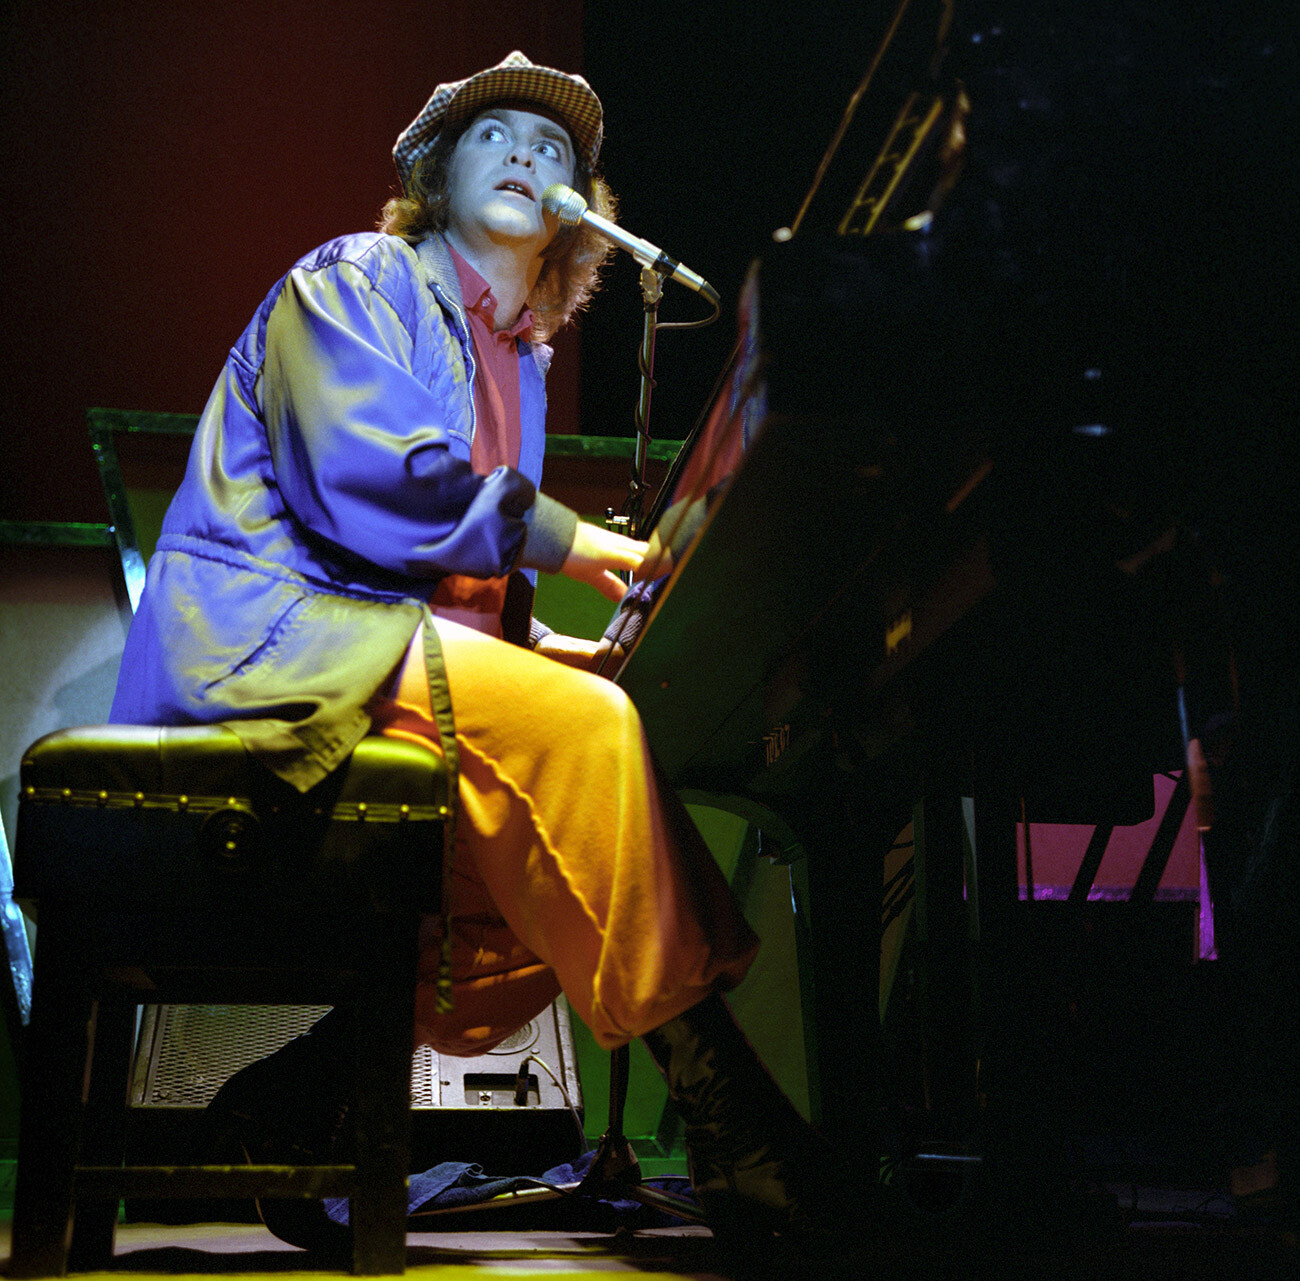 Elton John performing at the Oktyabrsky Grand Concert Hall in Leningrad.